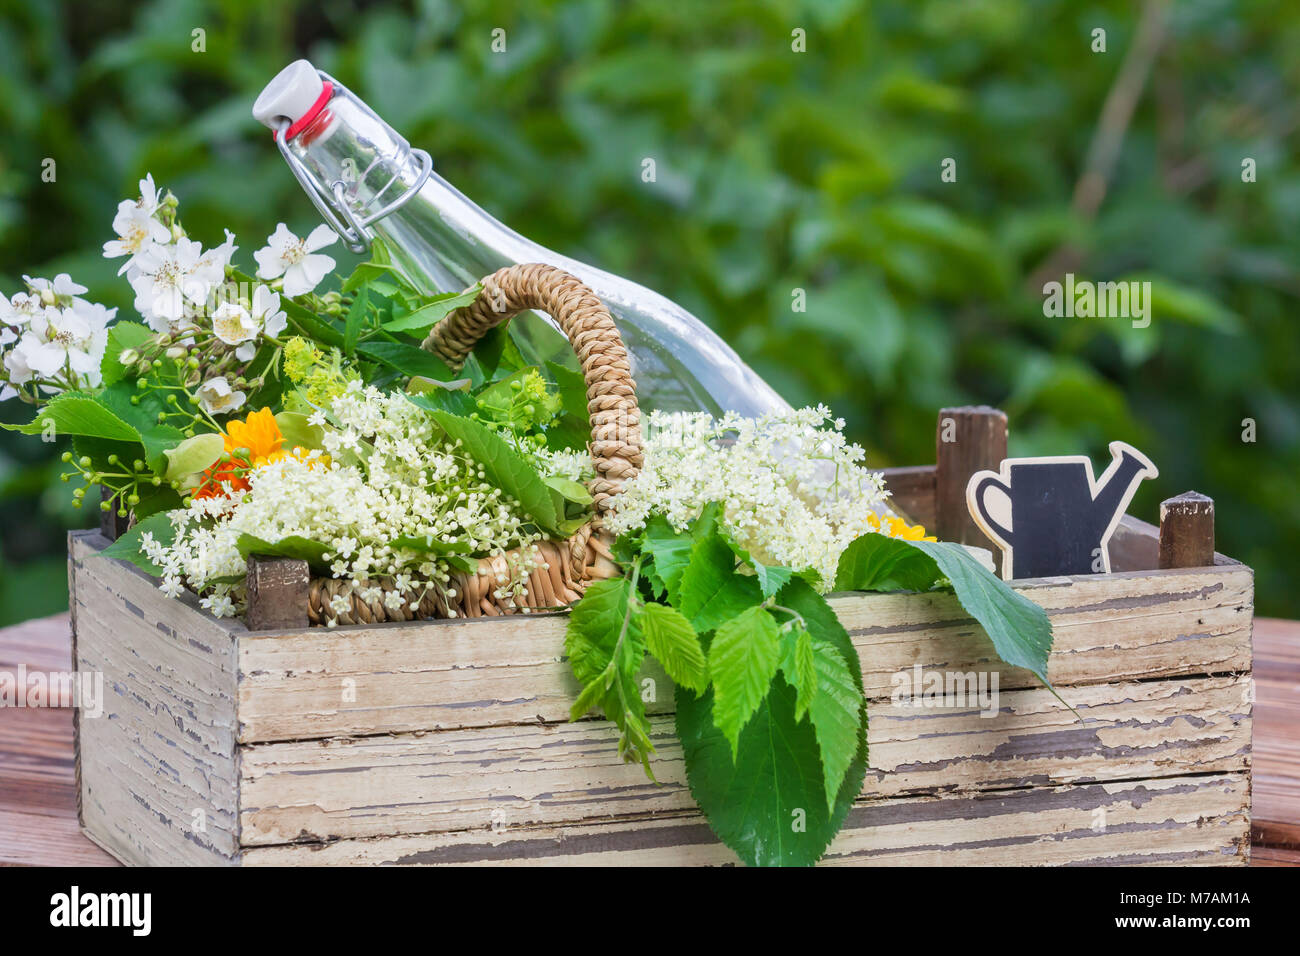 Herbs, herbal schnapps Stock Photo